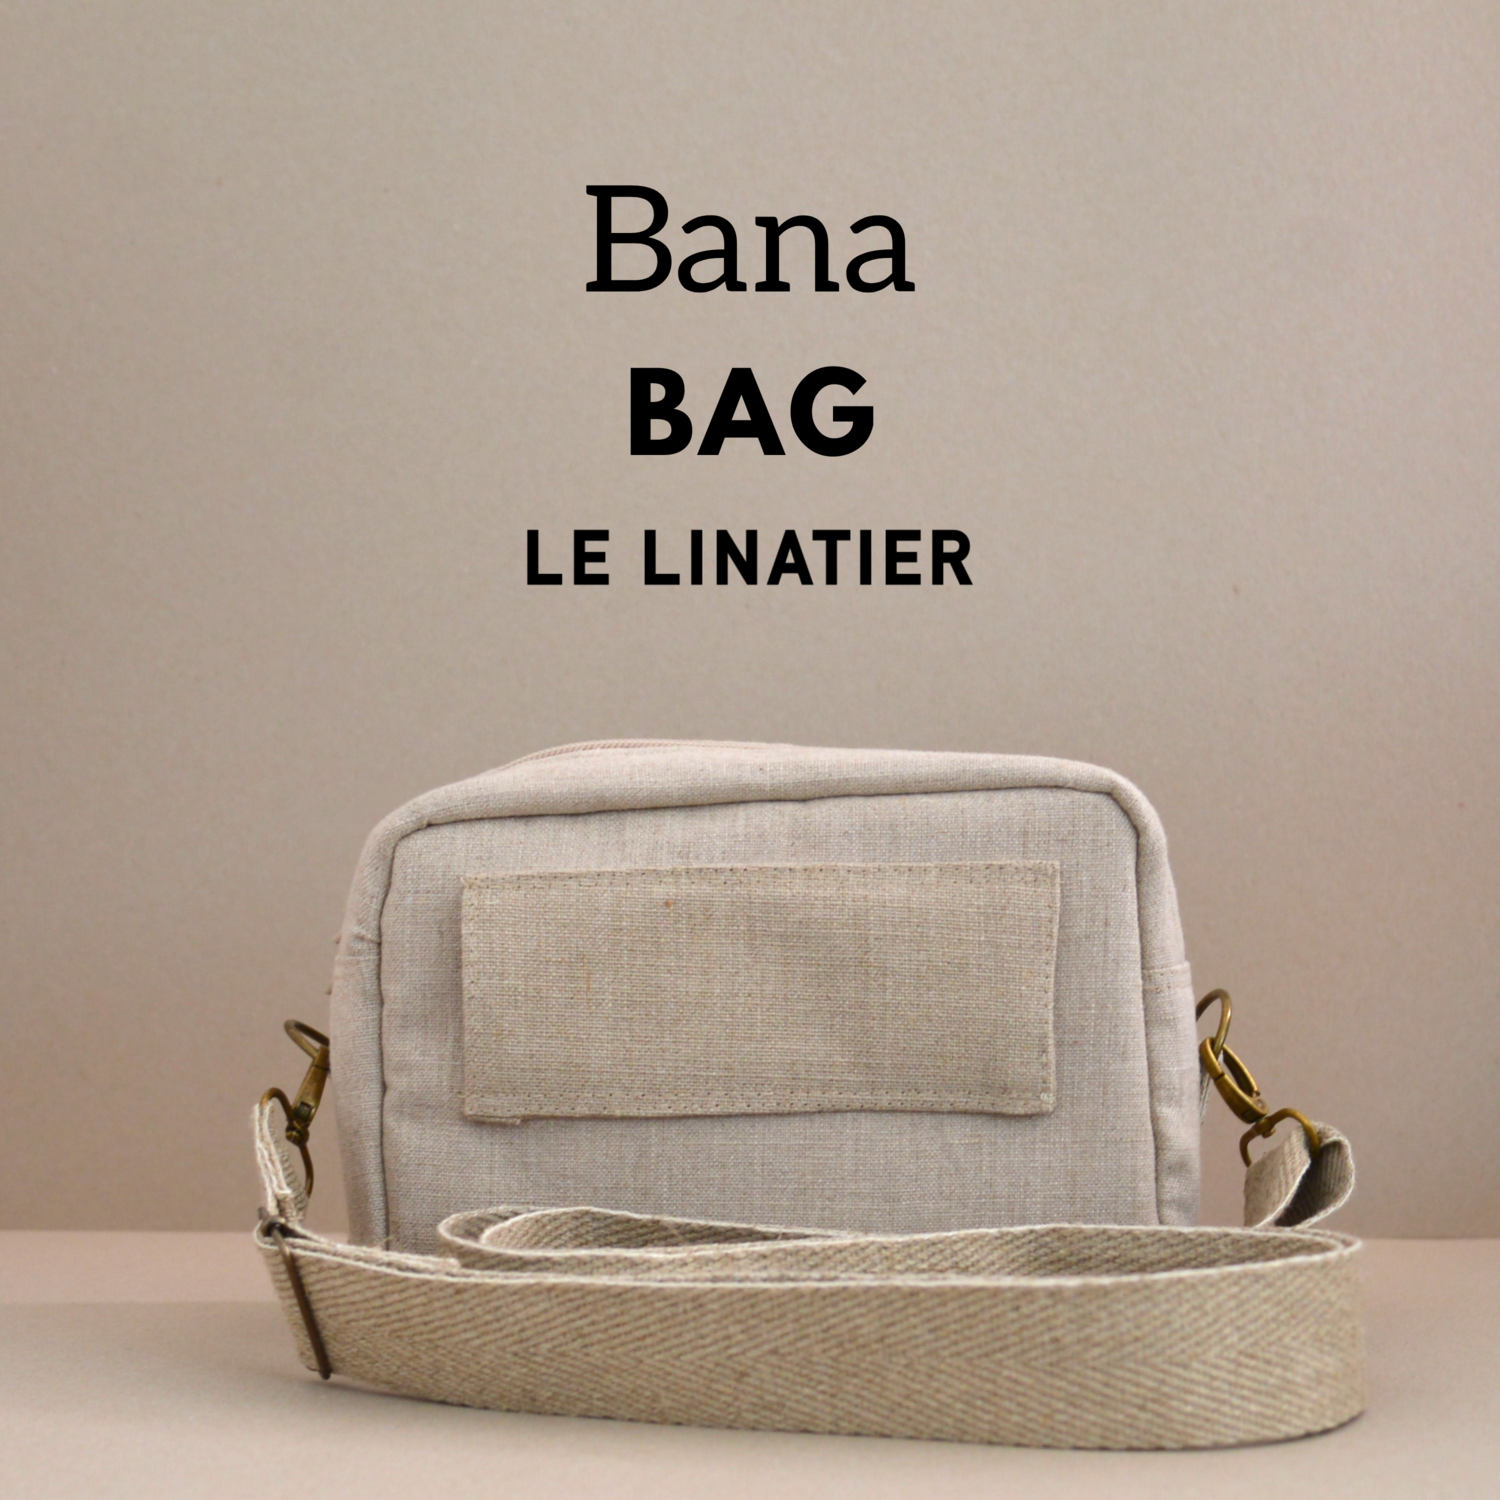 Bana Bag - Le Linatier 